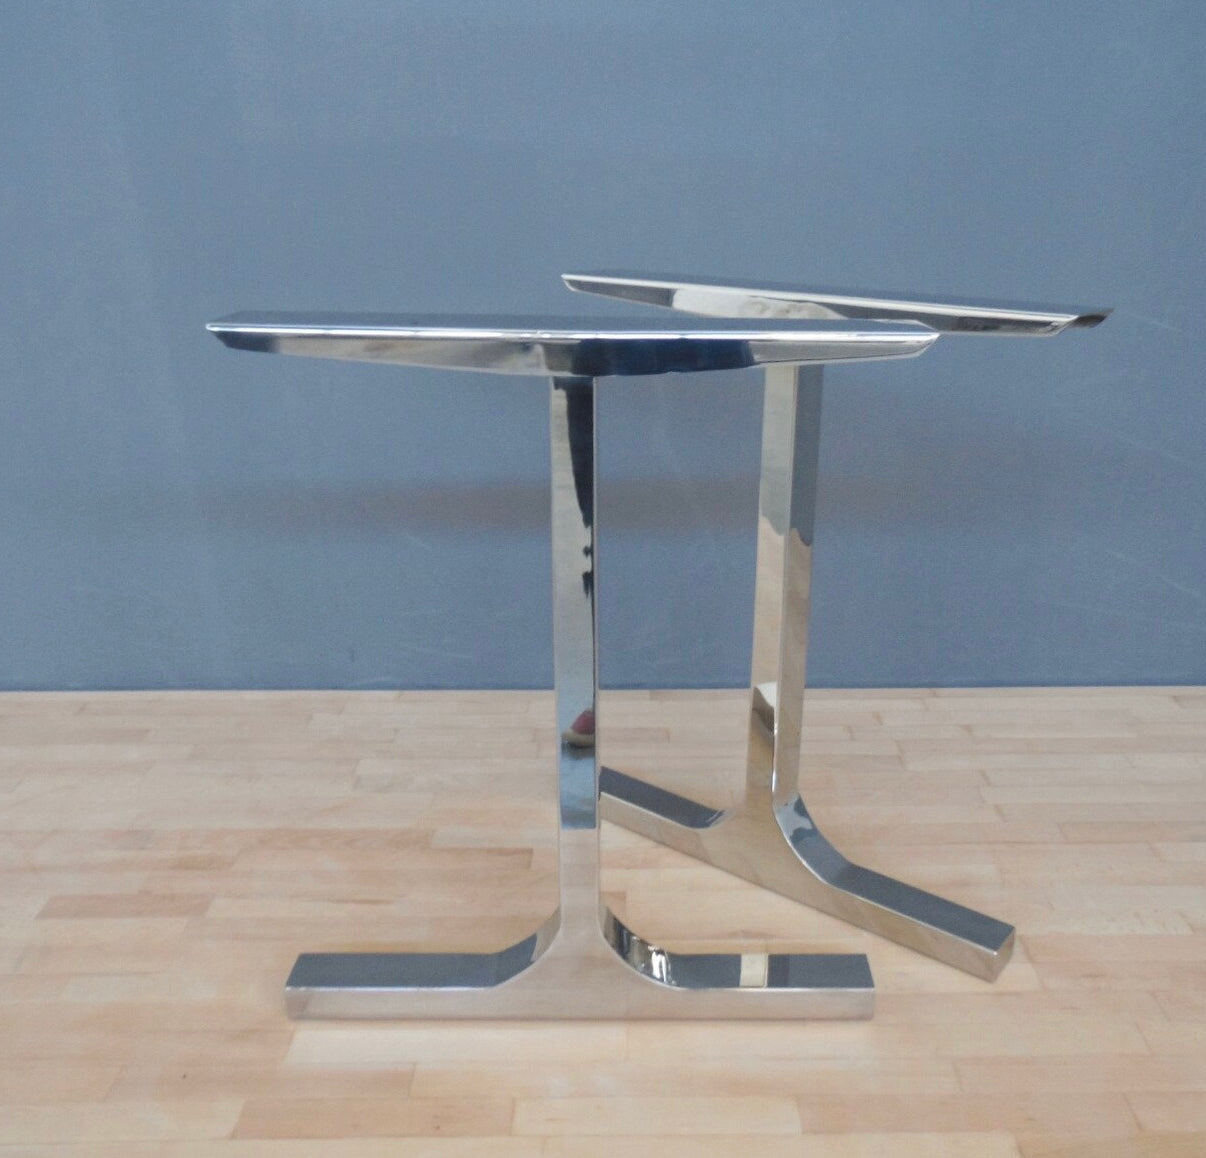 28" BESIK Single Bar Table Legs, Stainless Steel, 24" Width Base,height 26" 32" Set(2)